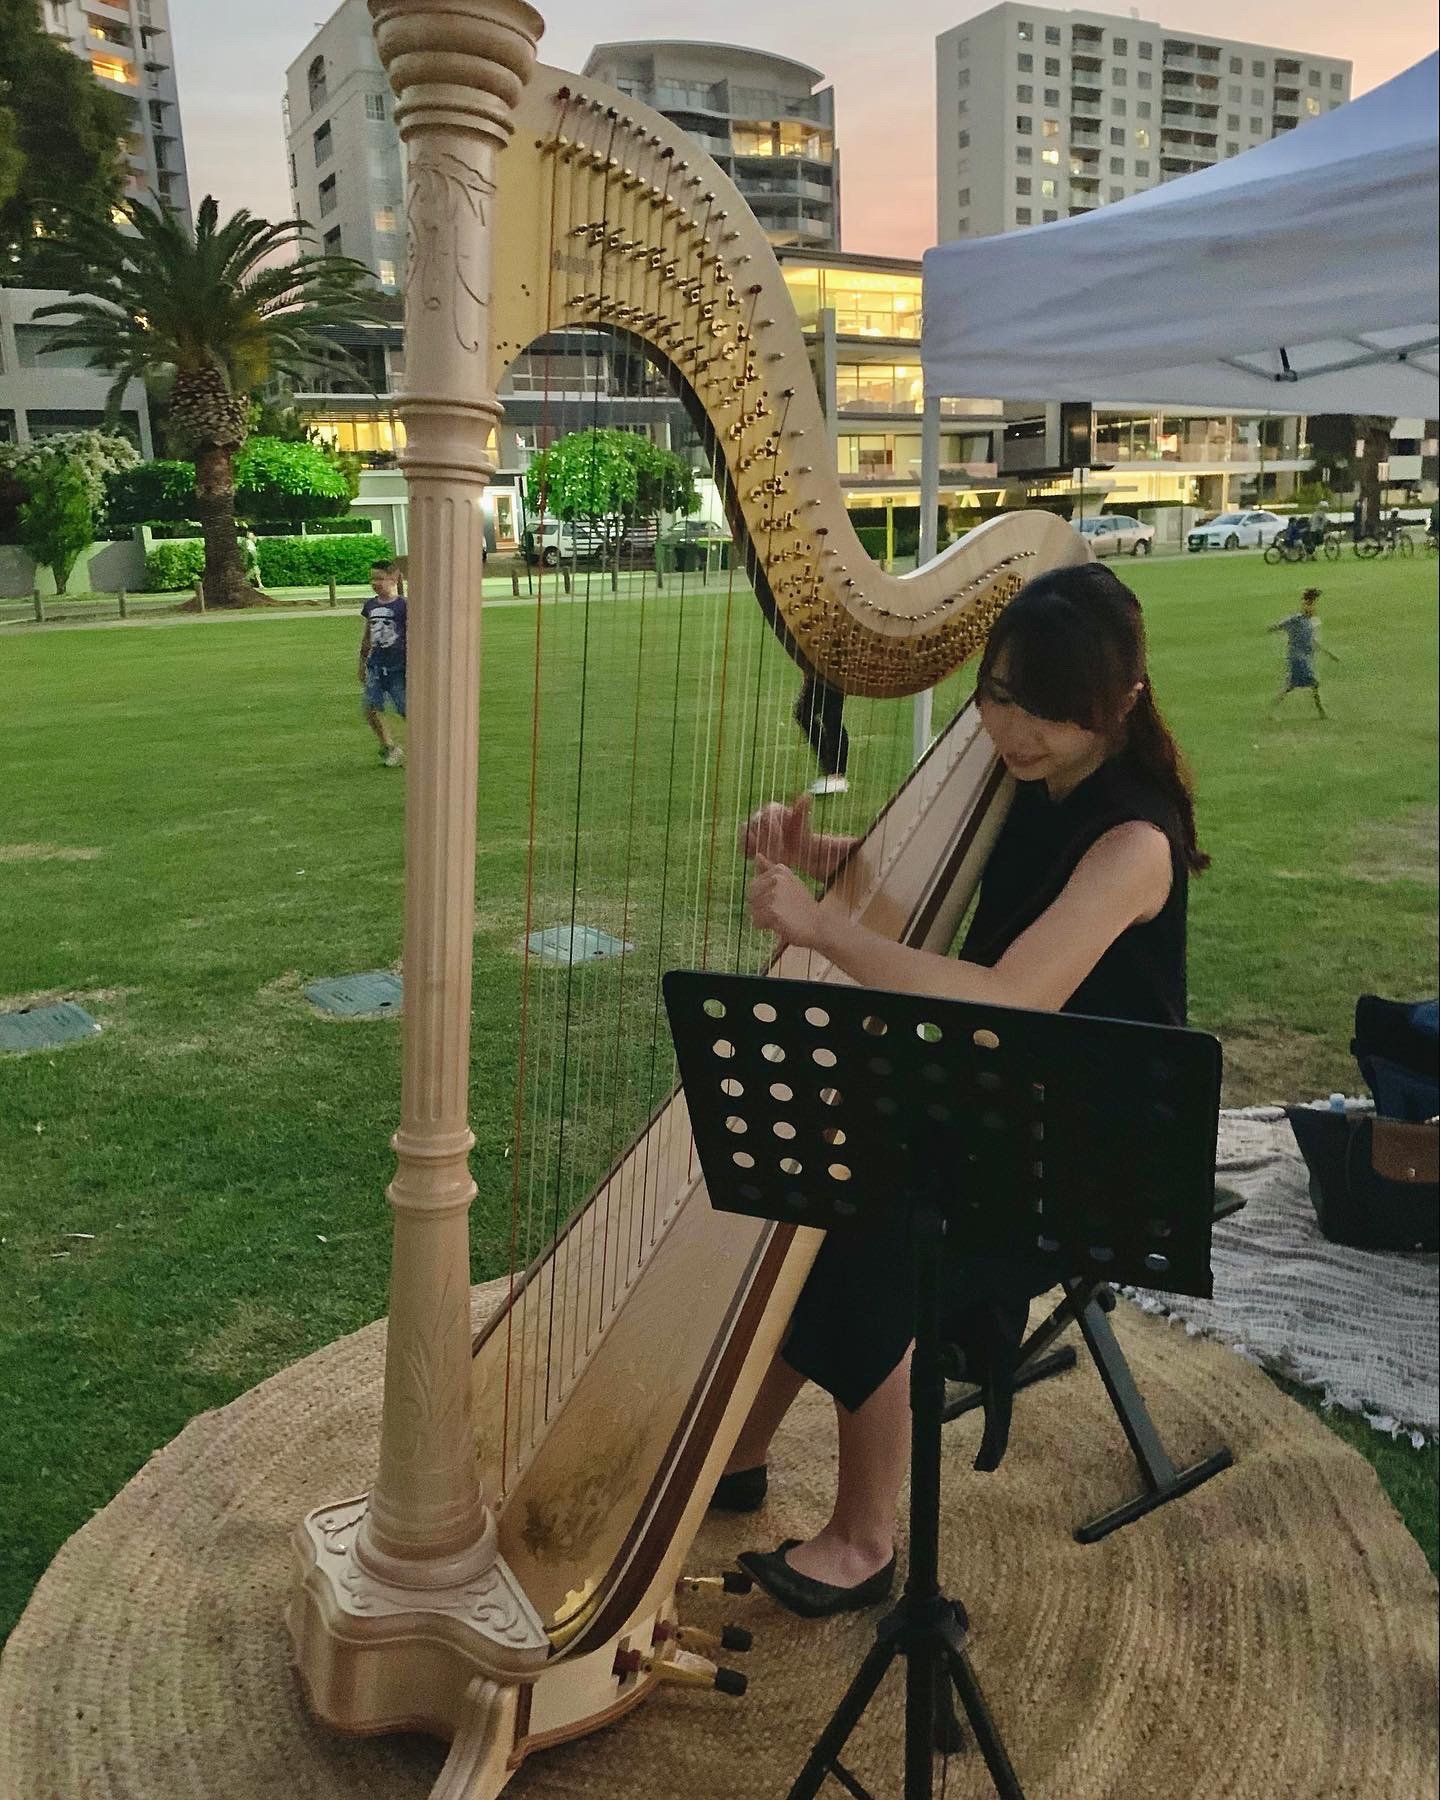 Focusing on the Harp